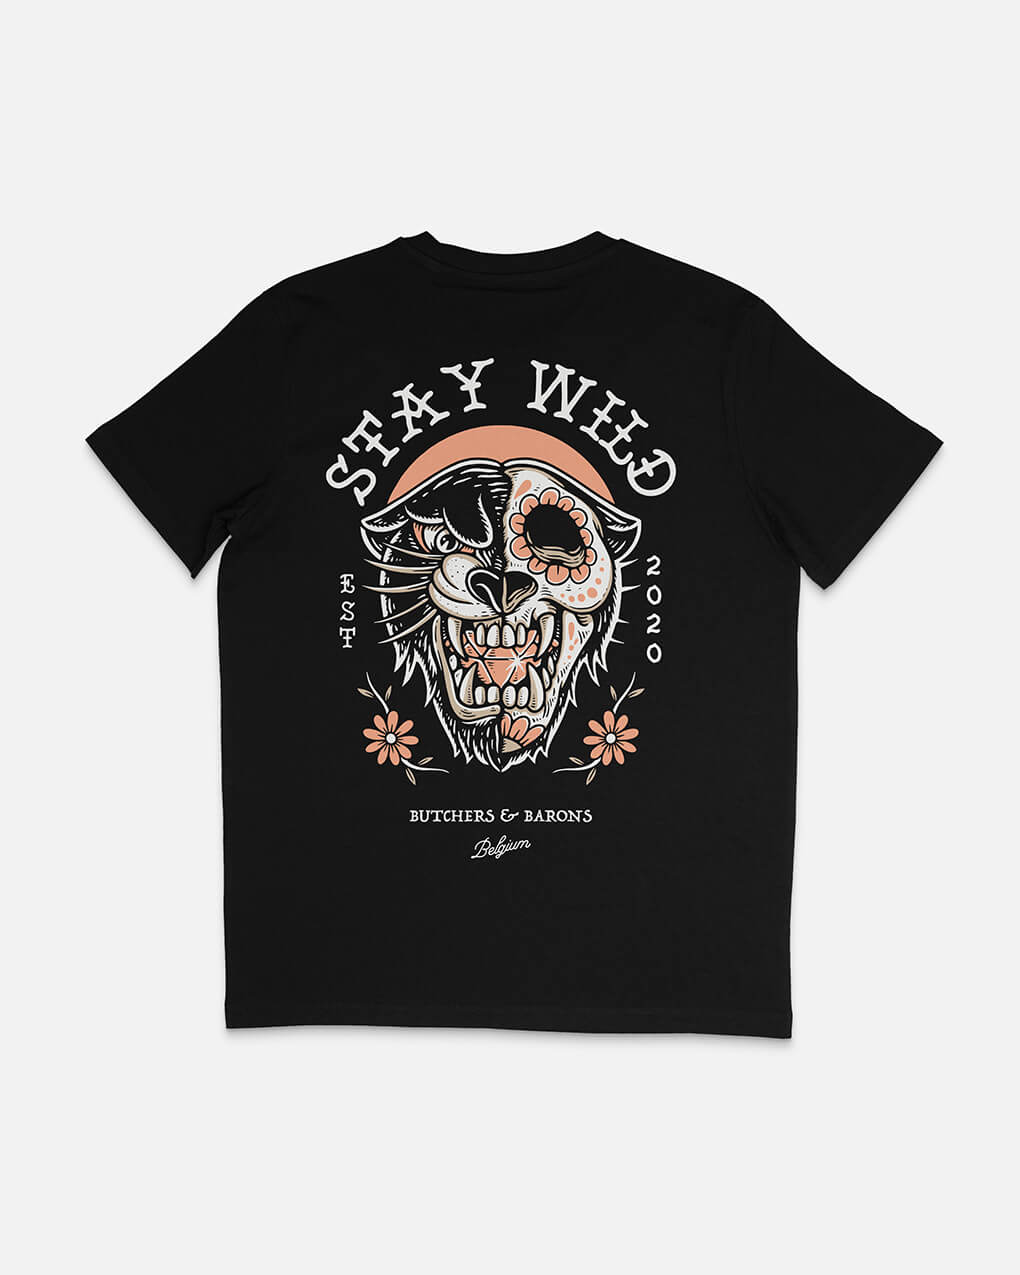 Stay Wild - black t-shirt by Butchers & Barons